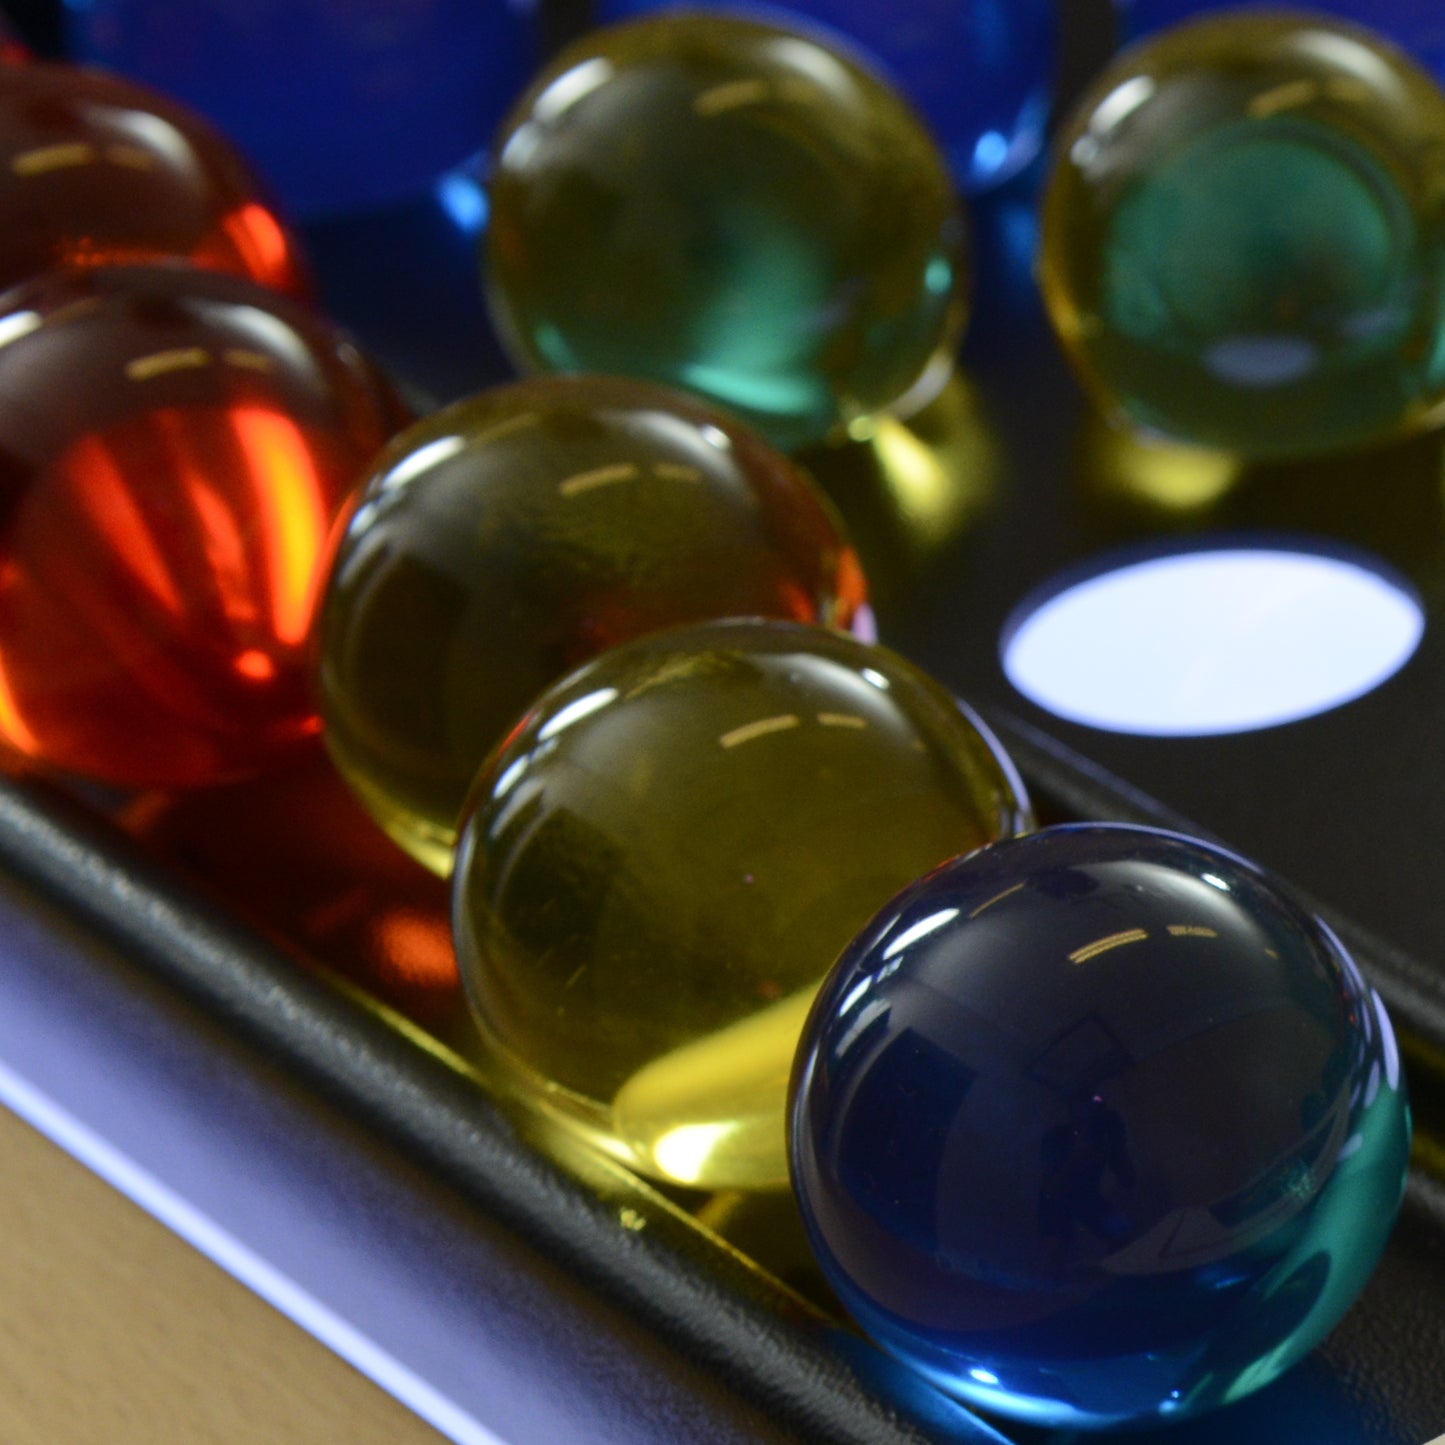 Masterkidz Translucent Acrylic Balls and Cylinders Sensory Play Set 高透明色彩 壓克力球和圓柱體 感官體驗套裝